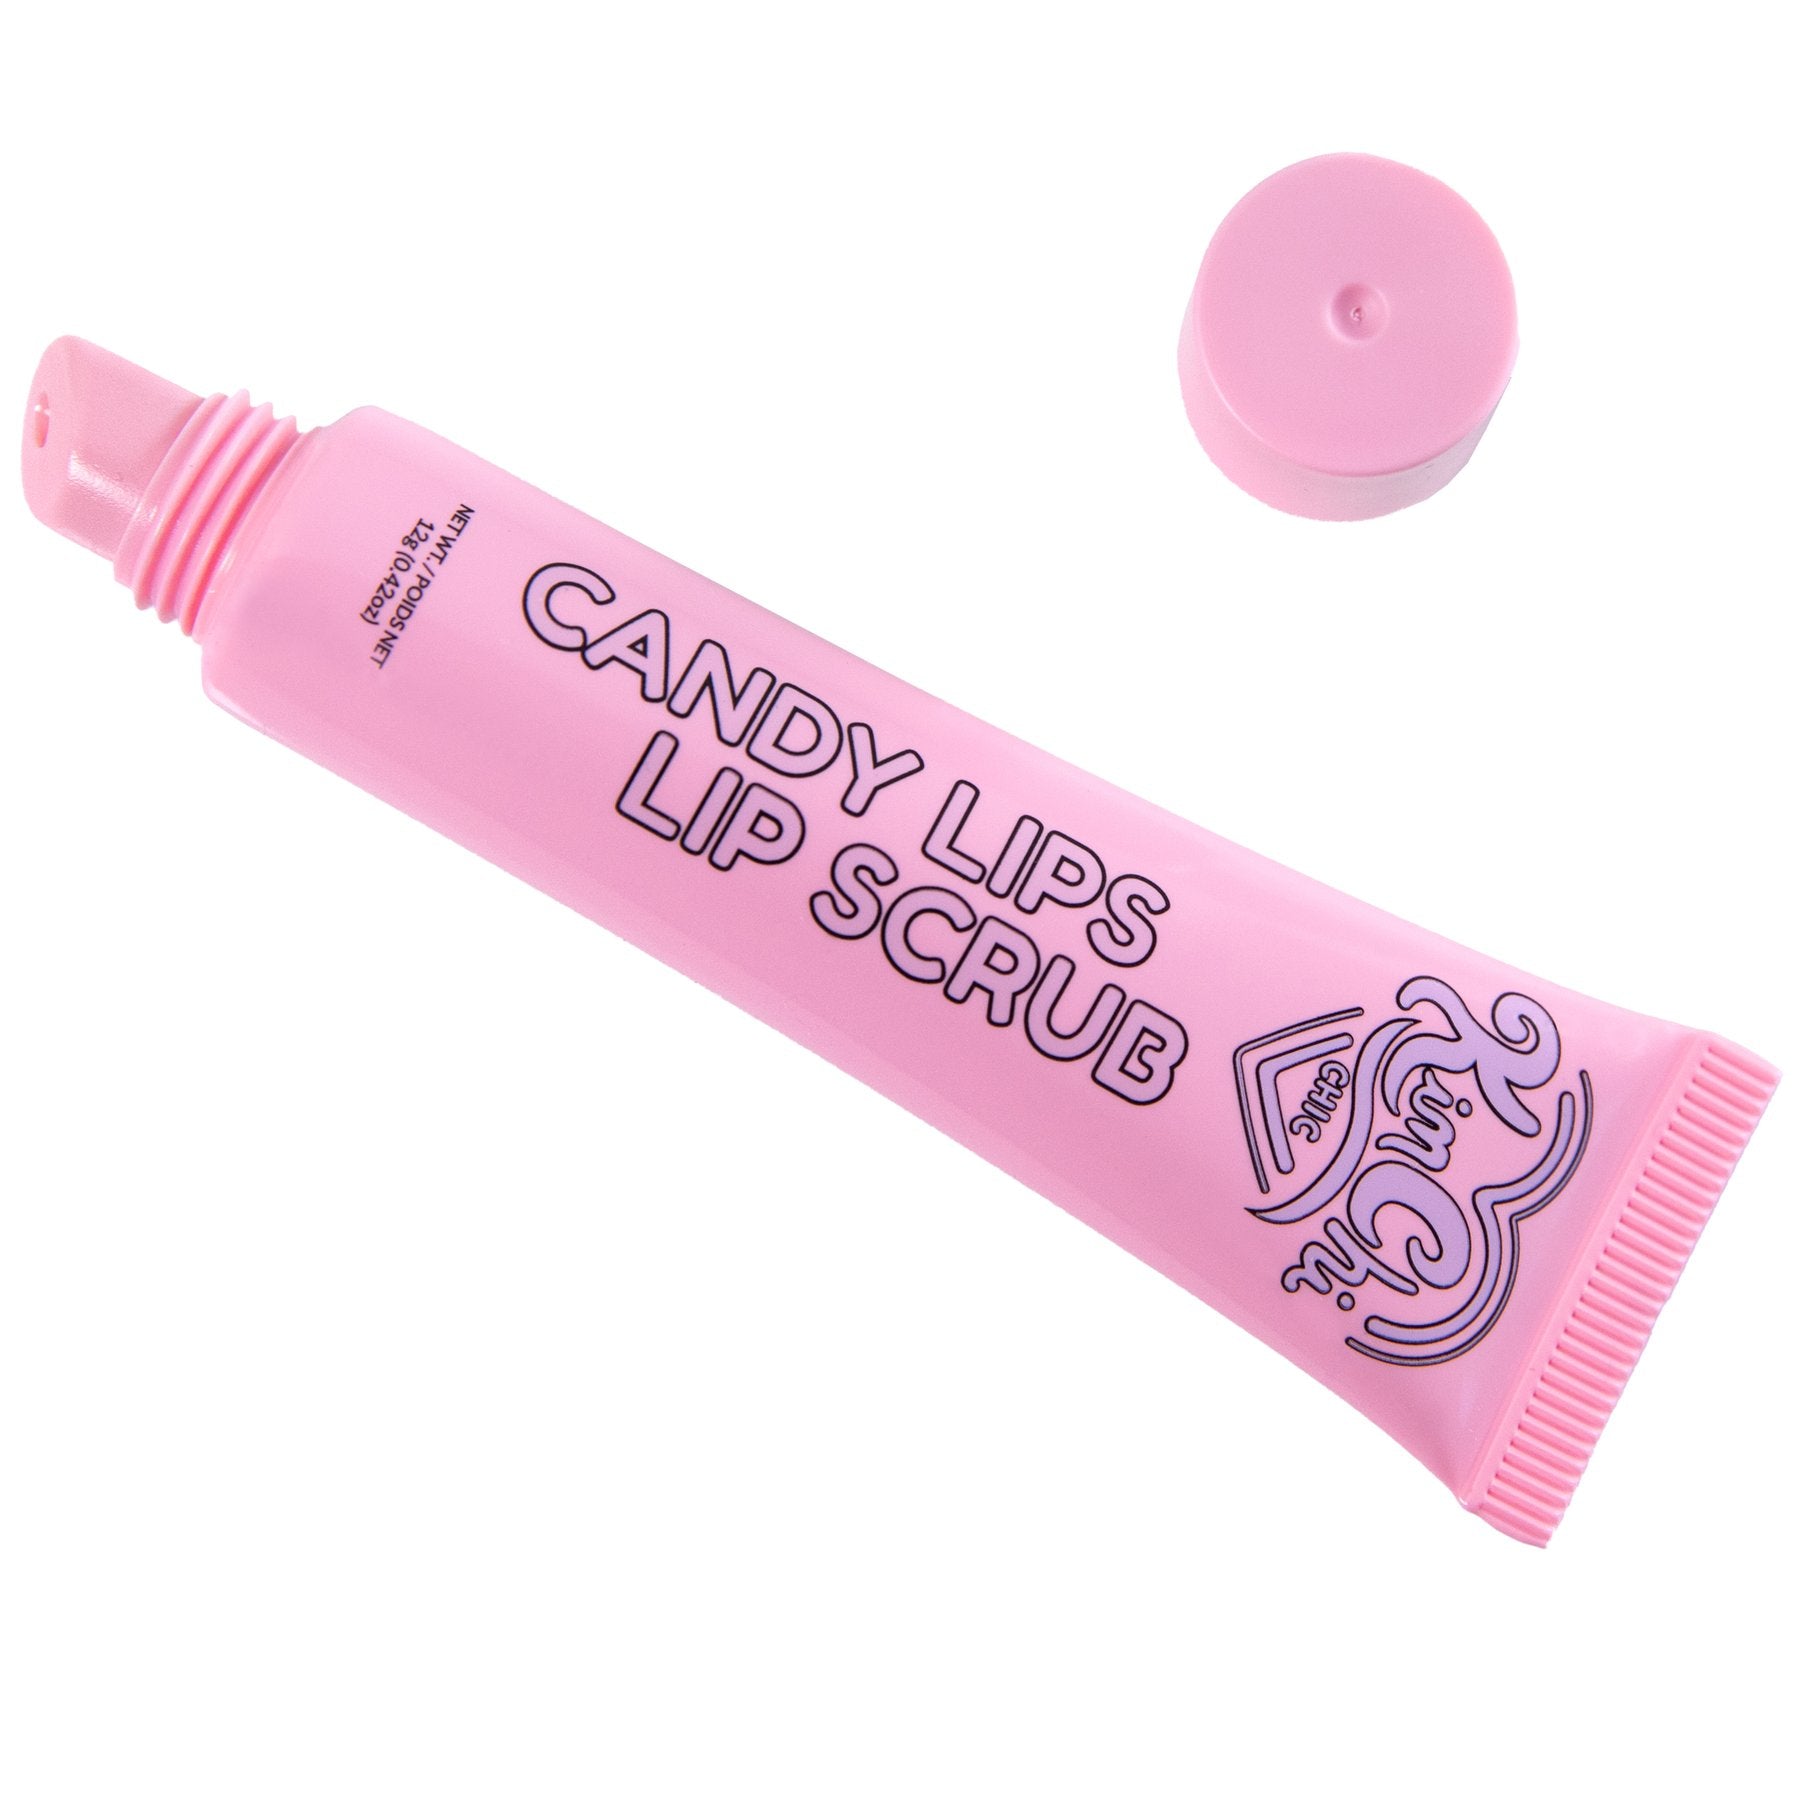 KimChi Chic - Candy Lips Lip Scrub in Minty Kisses